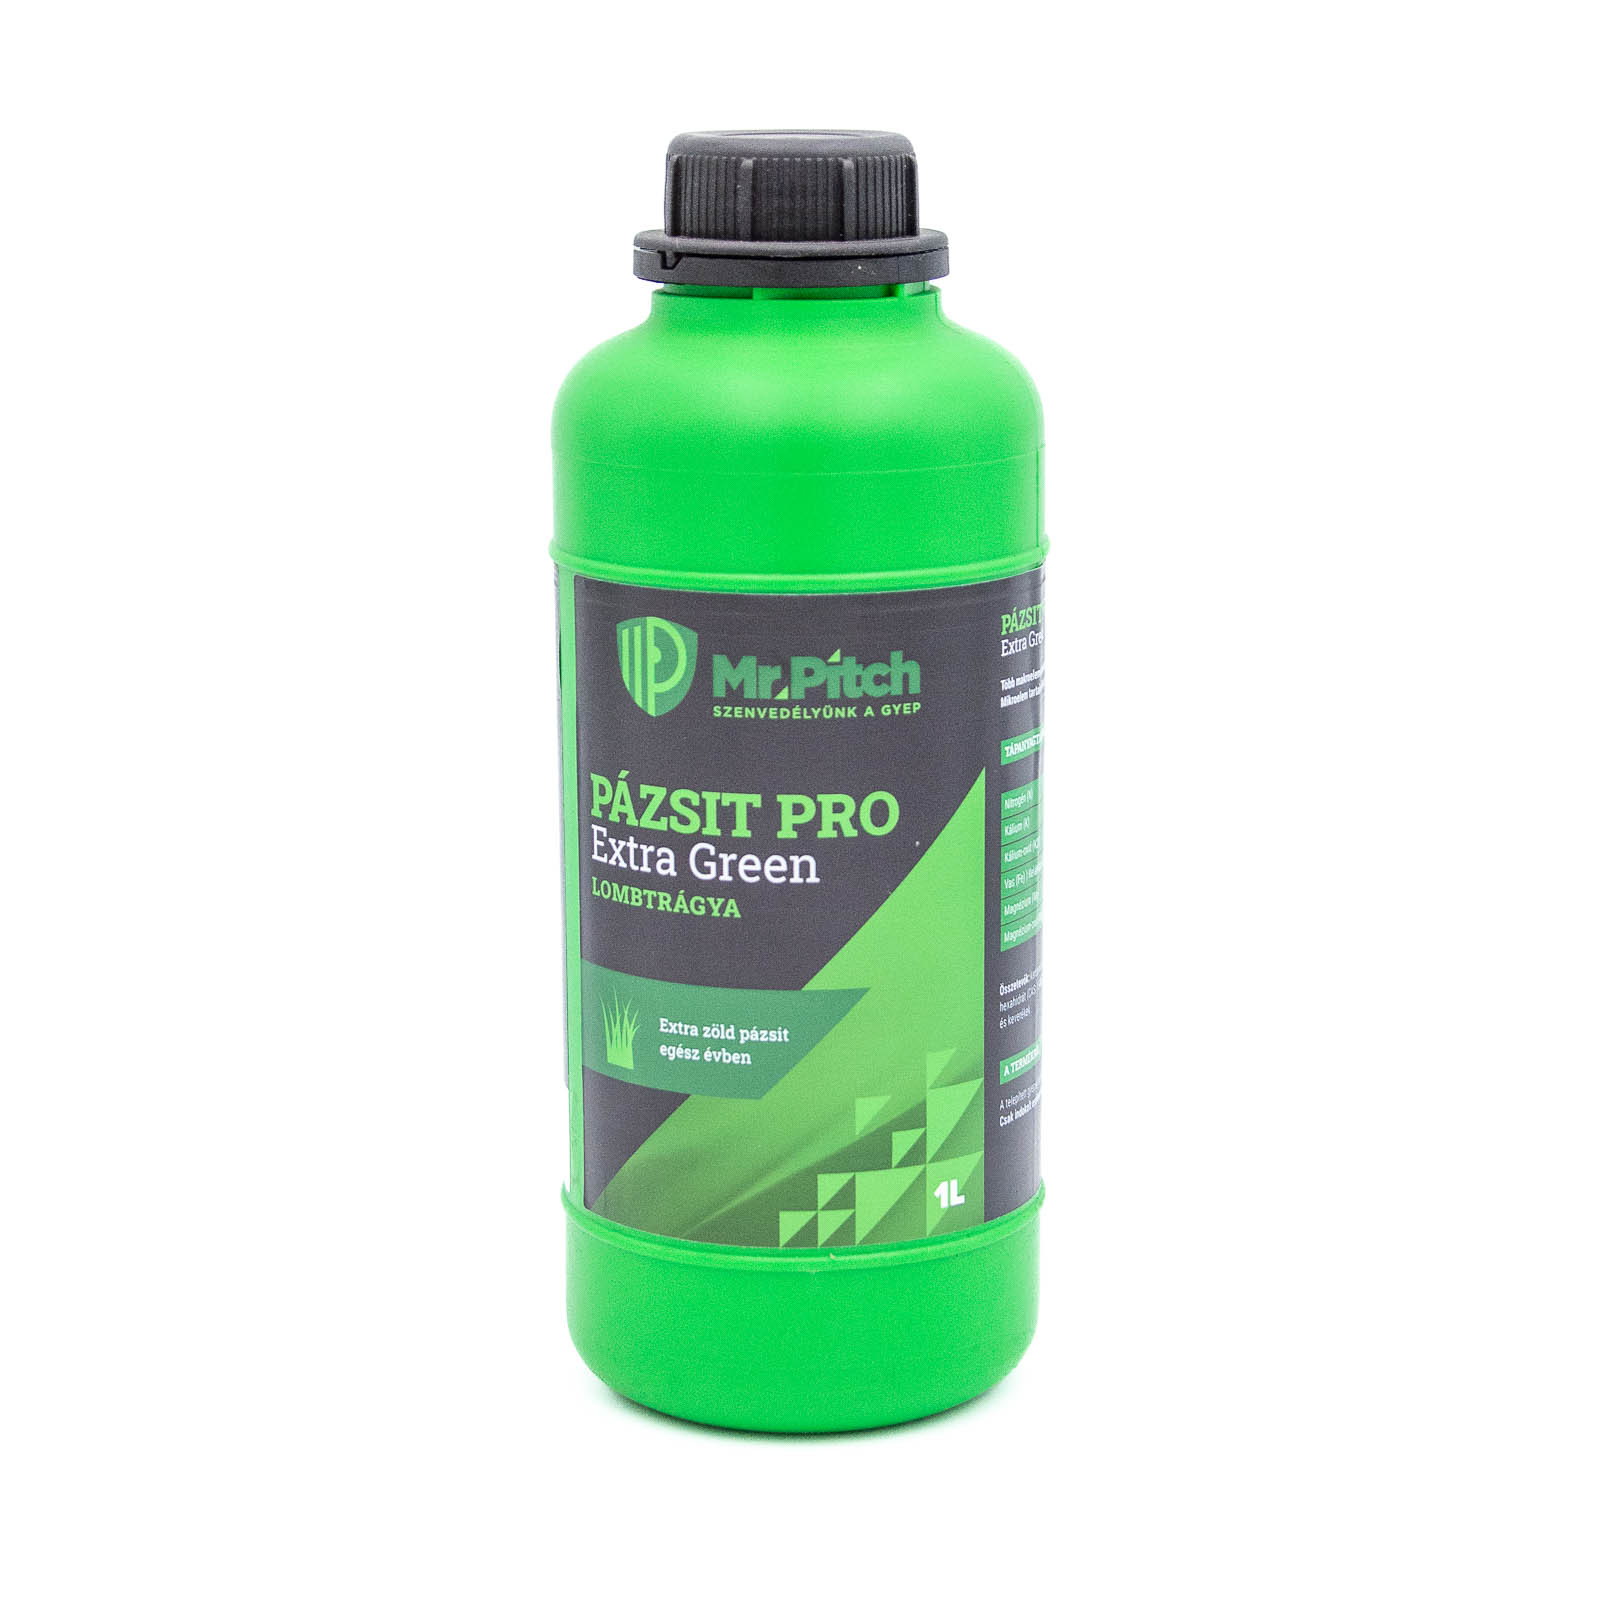 Mr. Pitch Pázsit Pro Extra Green lombtrágya  - Extra Zöldítő 1 l